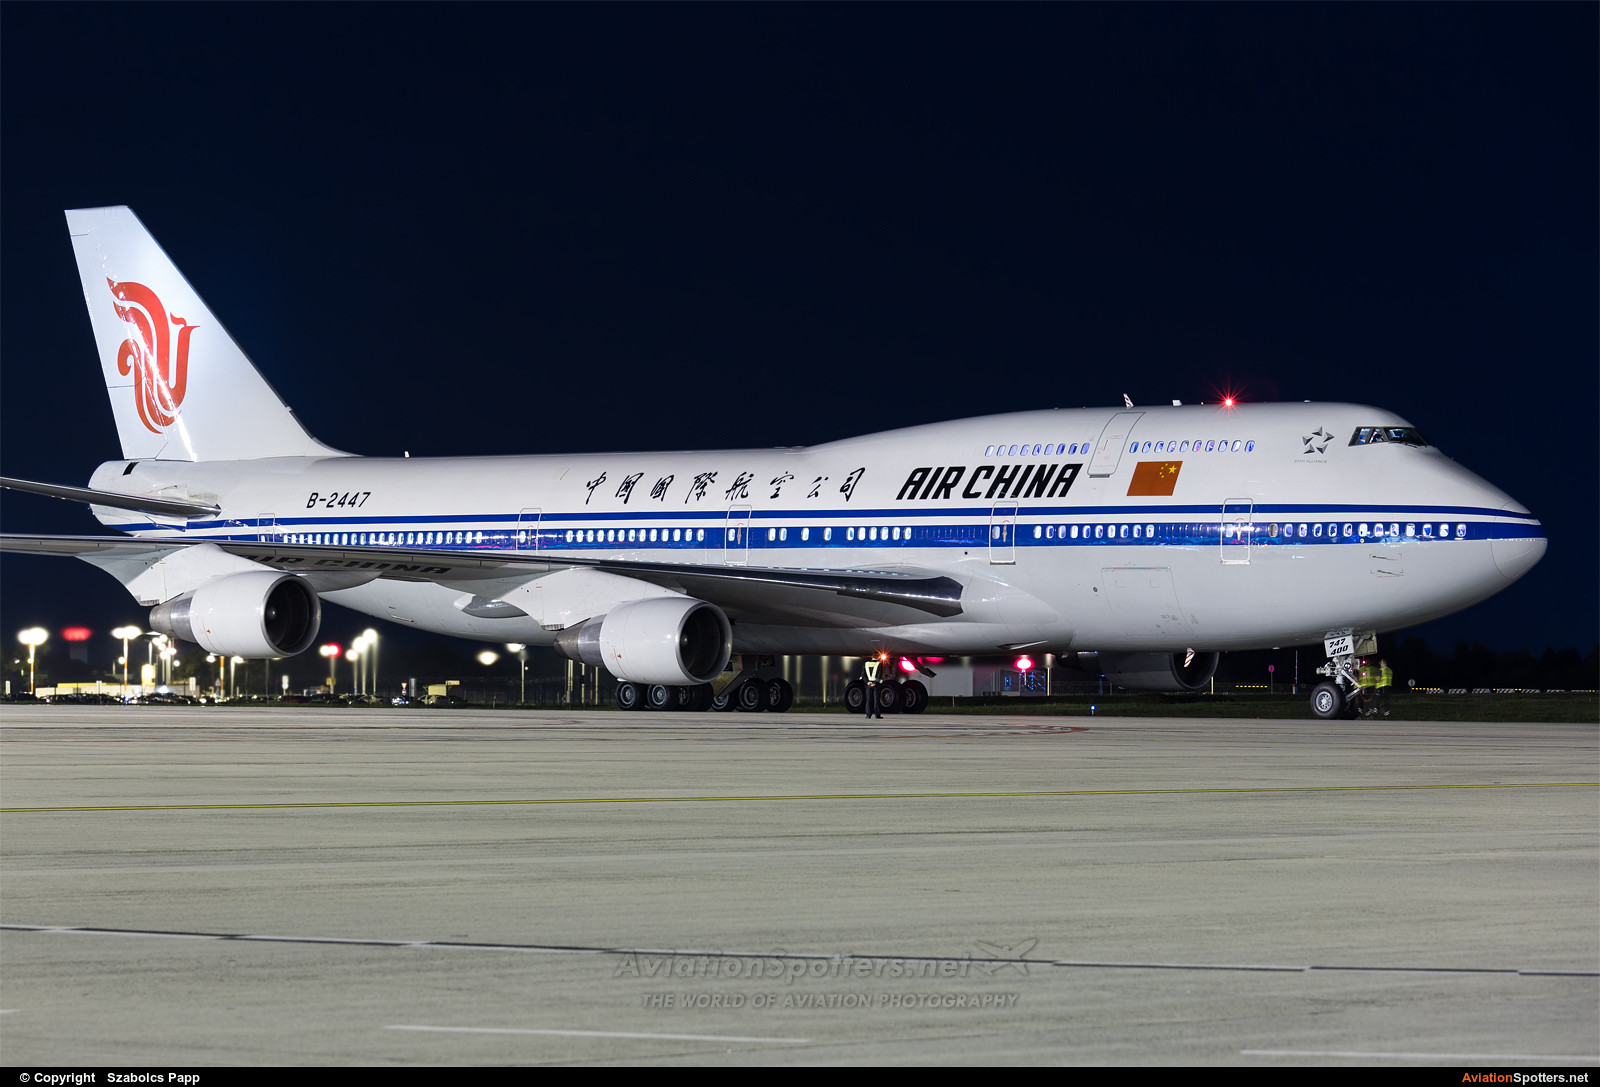 Air China  -  747-400  (B-2447) By Szabolcs Papp (mr.szabi)